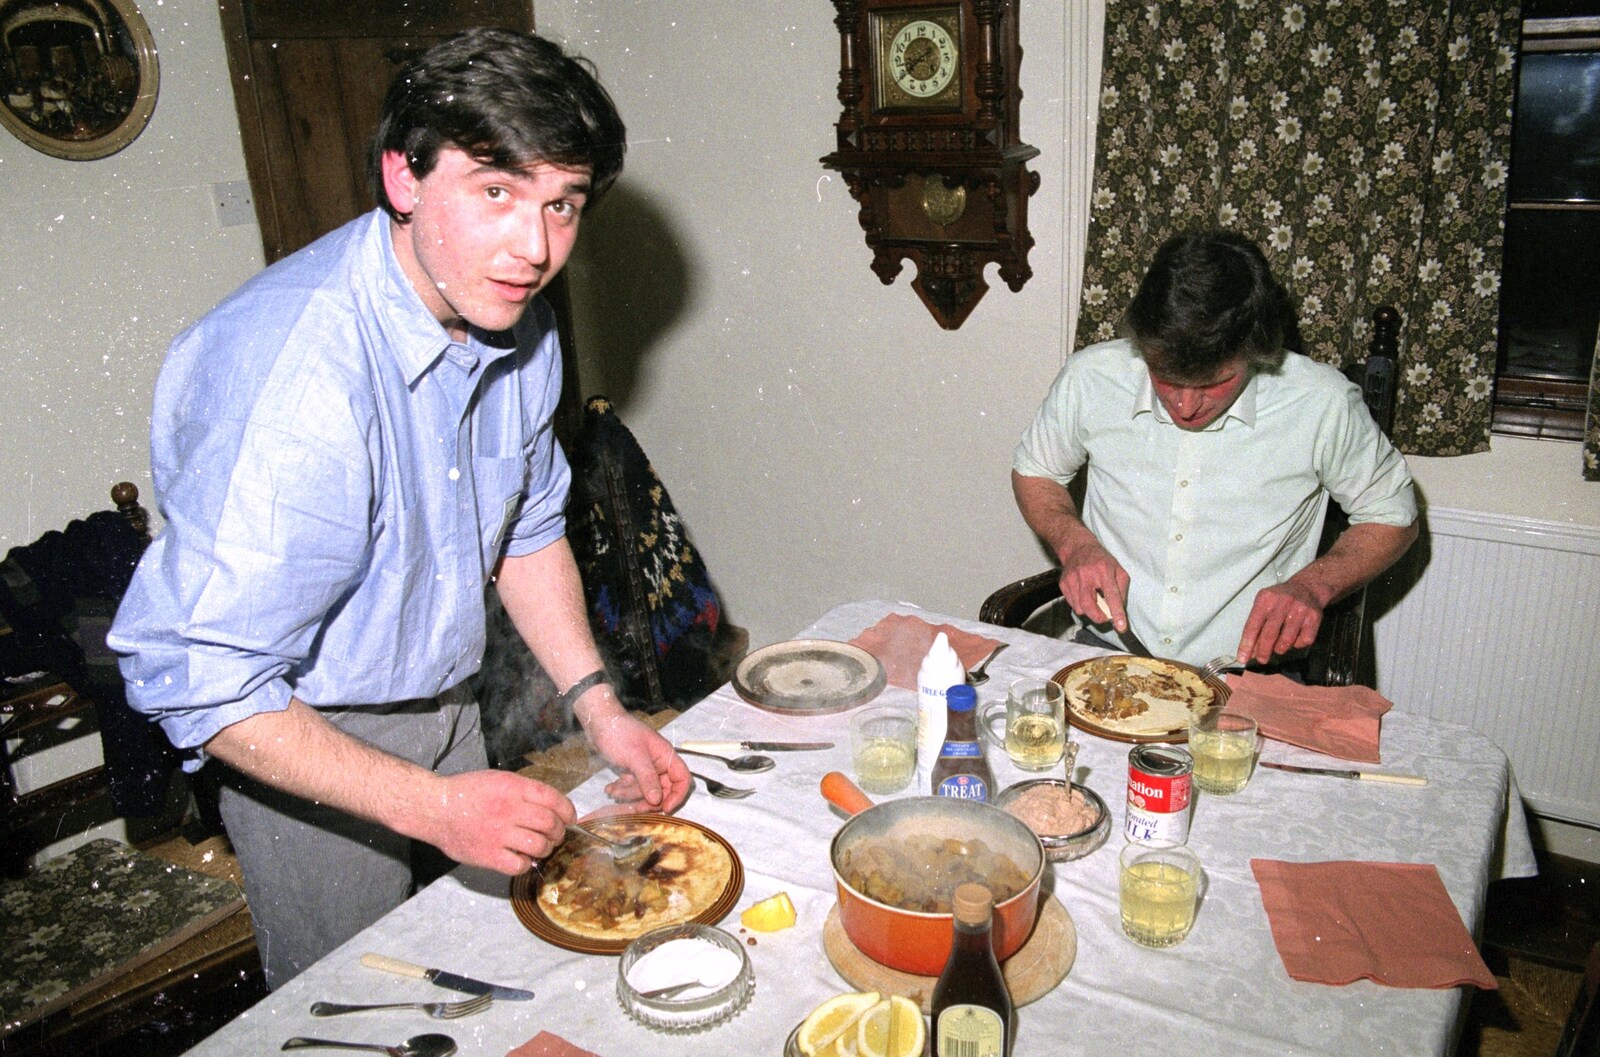 David preps a pancake from Pancake Day, Stuston, Suffolk - 18th February 1991